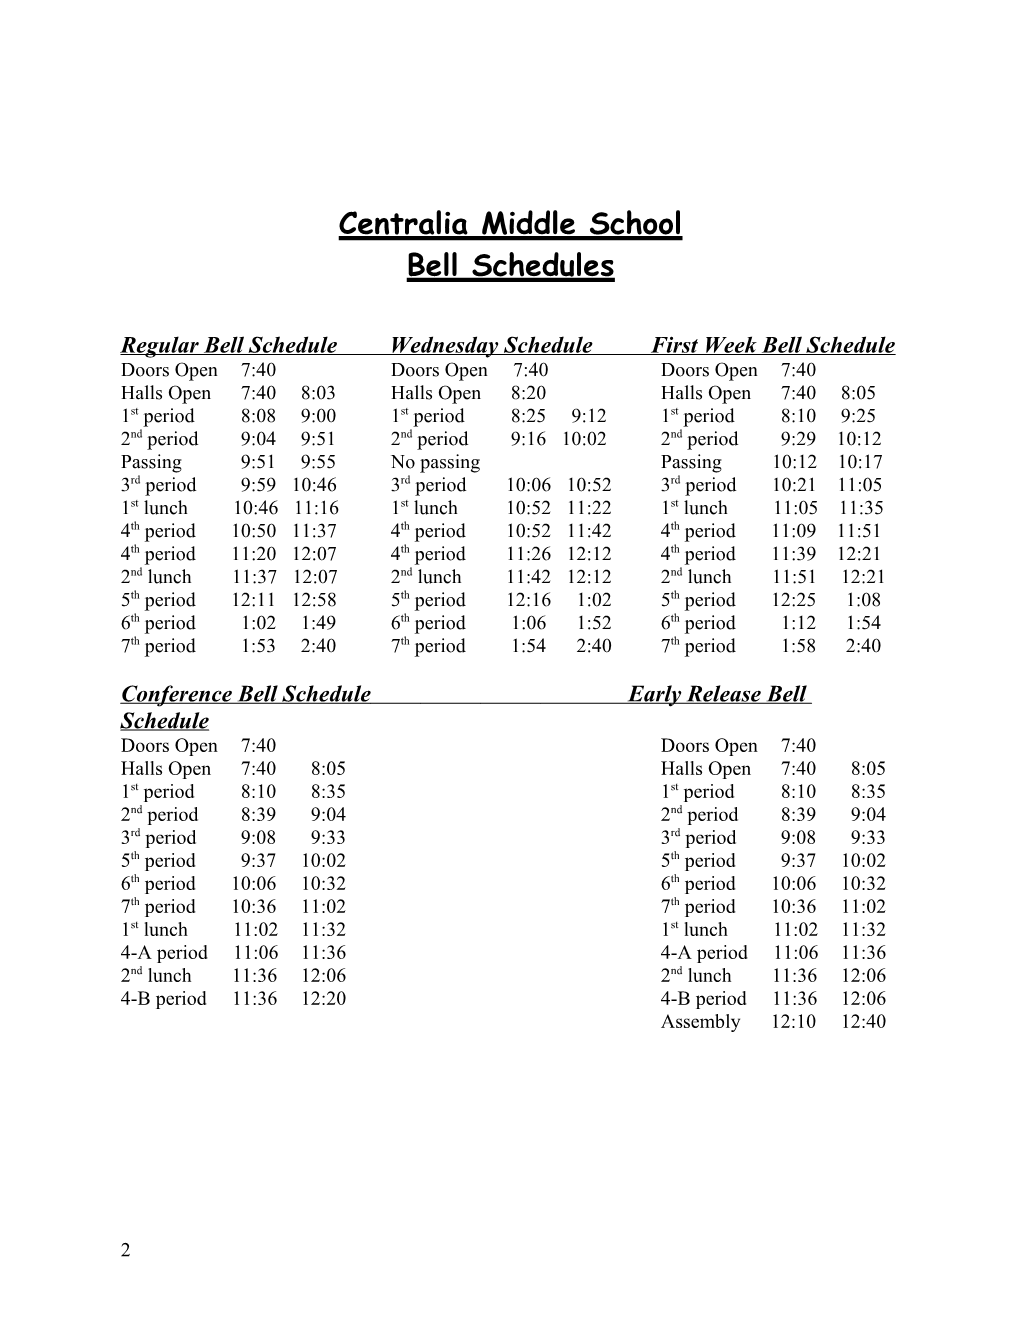 Centralia Middle School - General Information